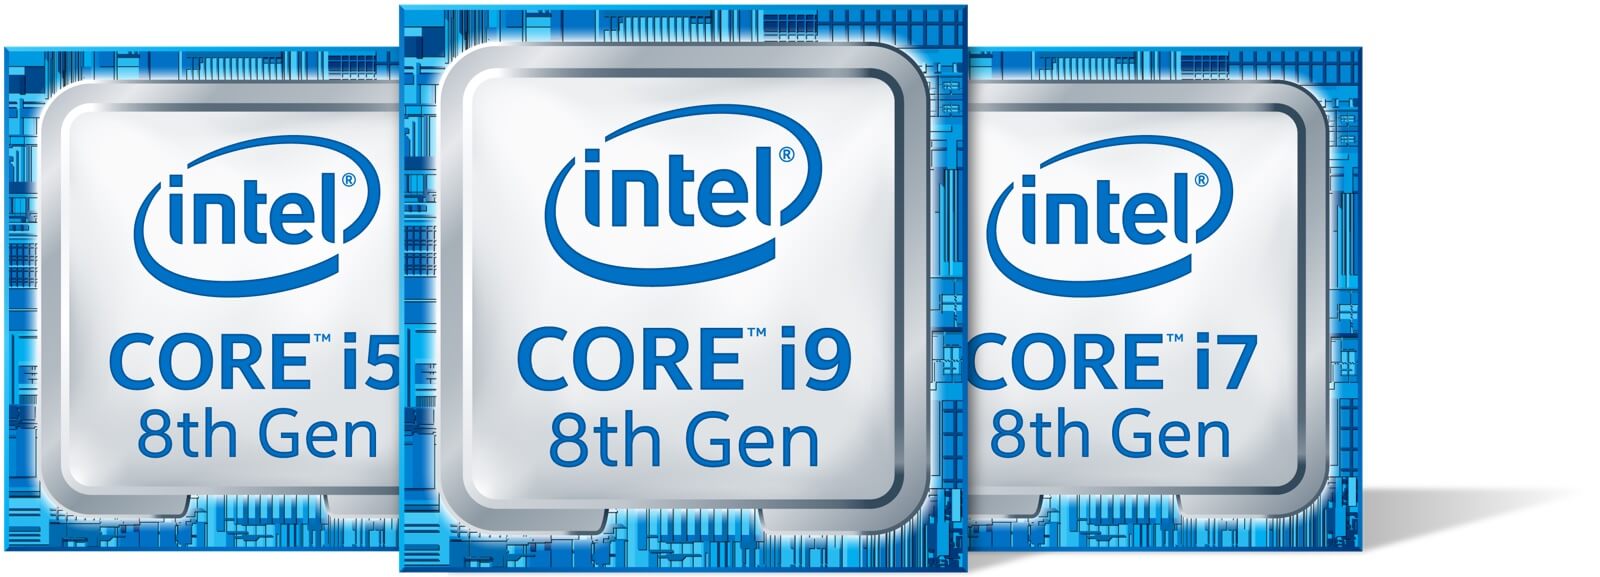 8th+Gen+Intel+Core+family+badges